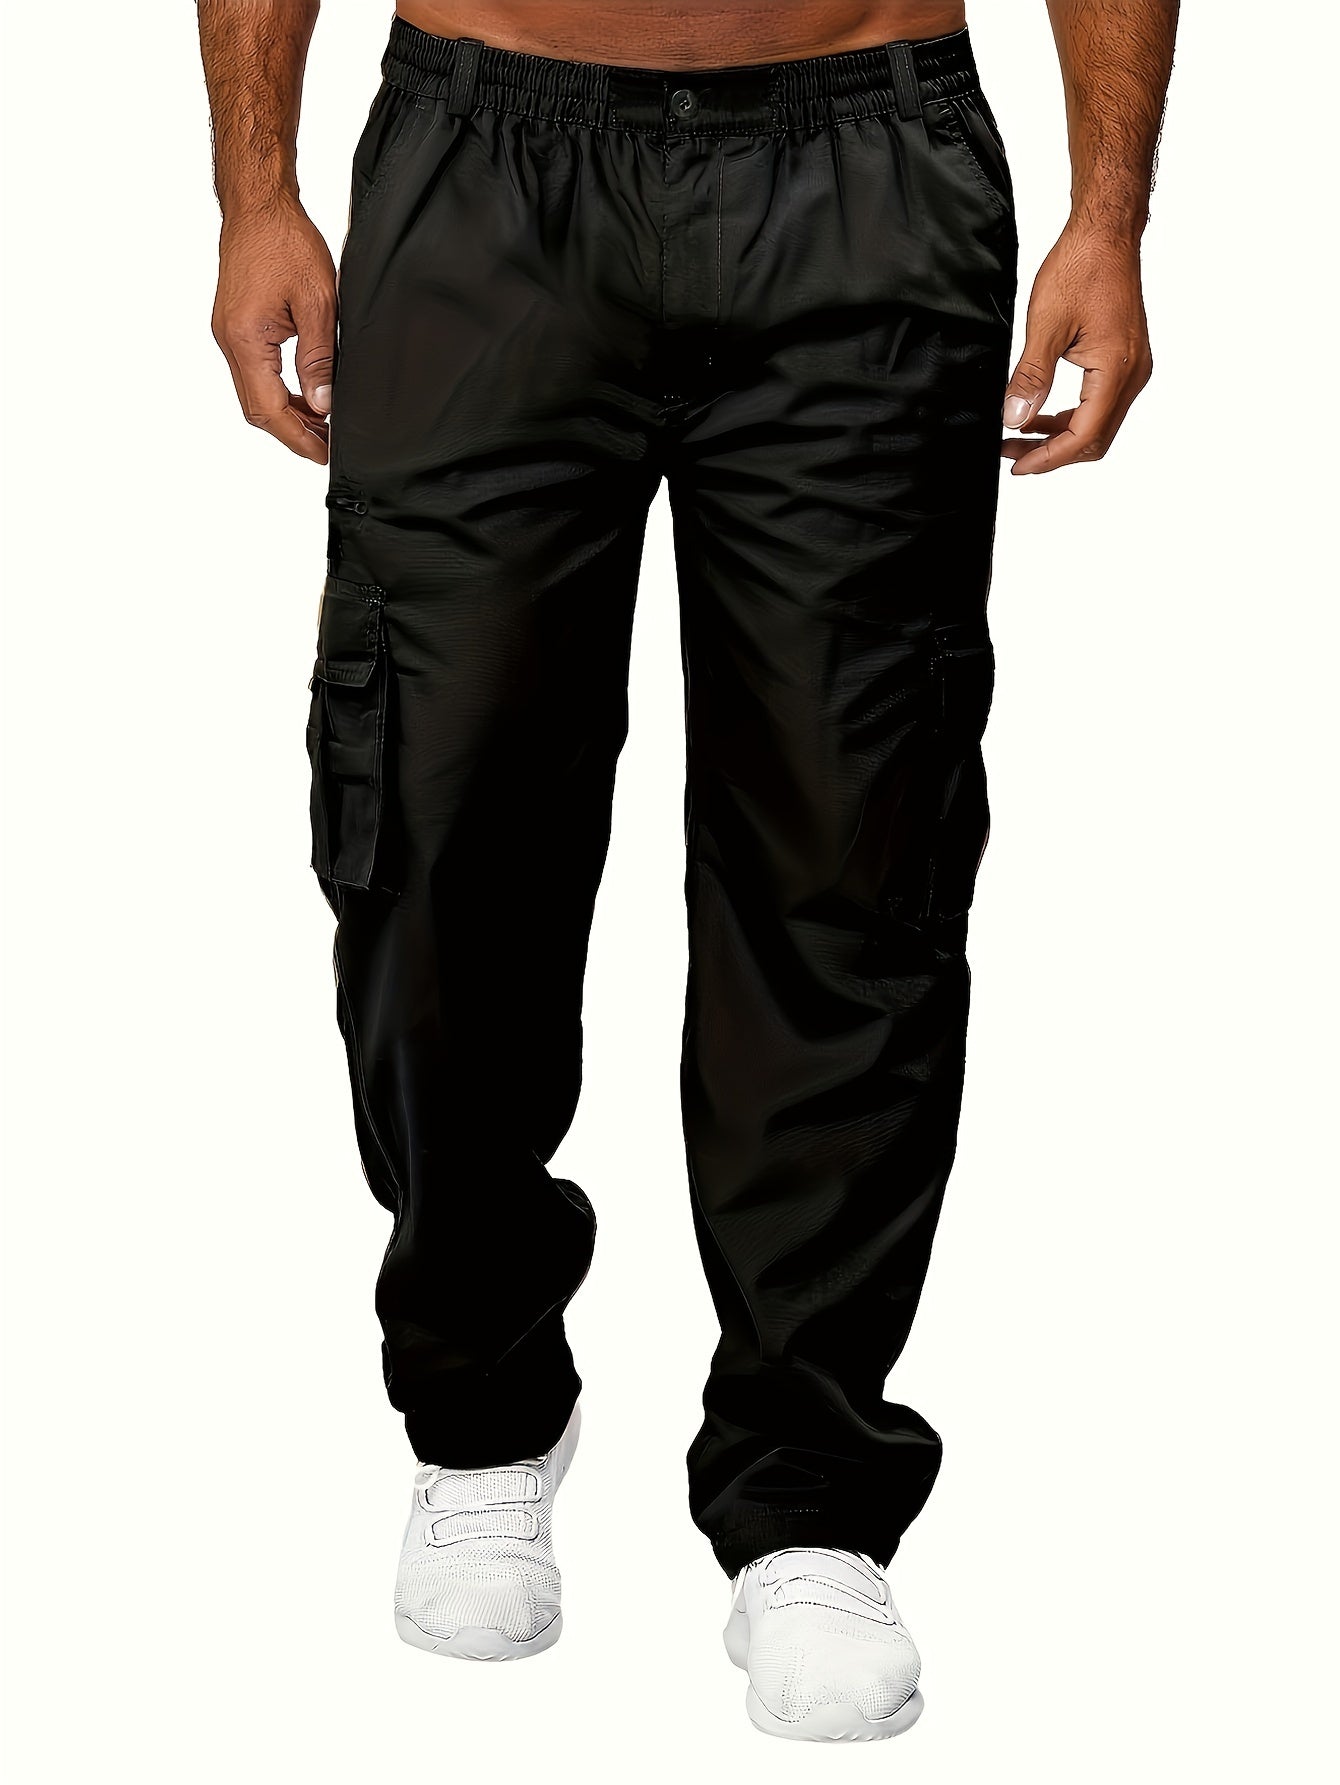 Multi Pocket Cargo Pants, Men's Casual Straight Leg Drawstring Cargo Pants/Joggers For Spring Summer Outdoor